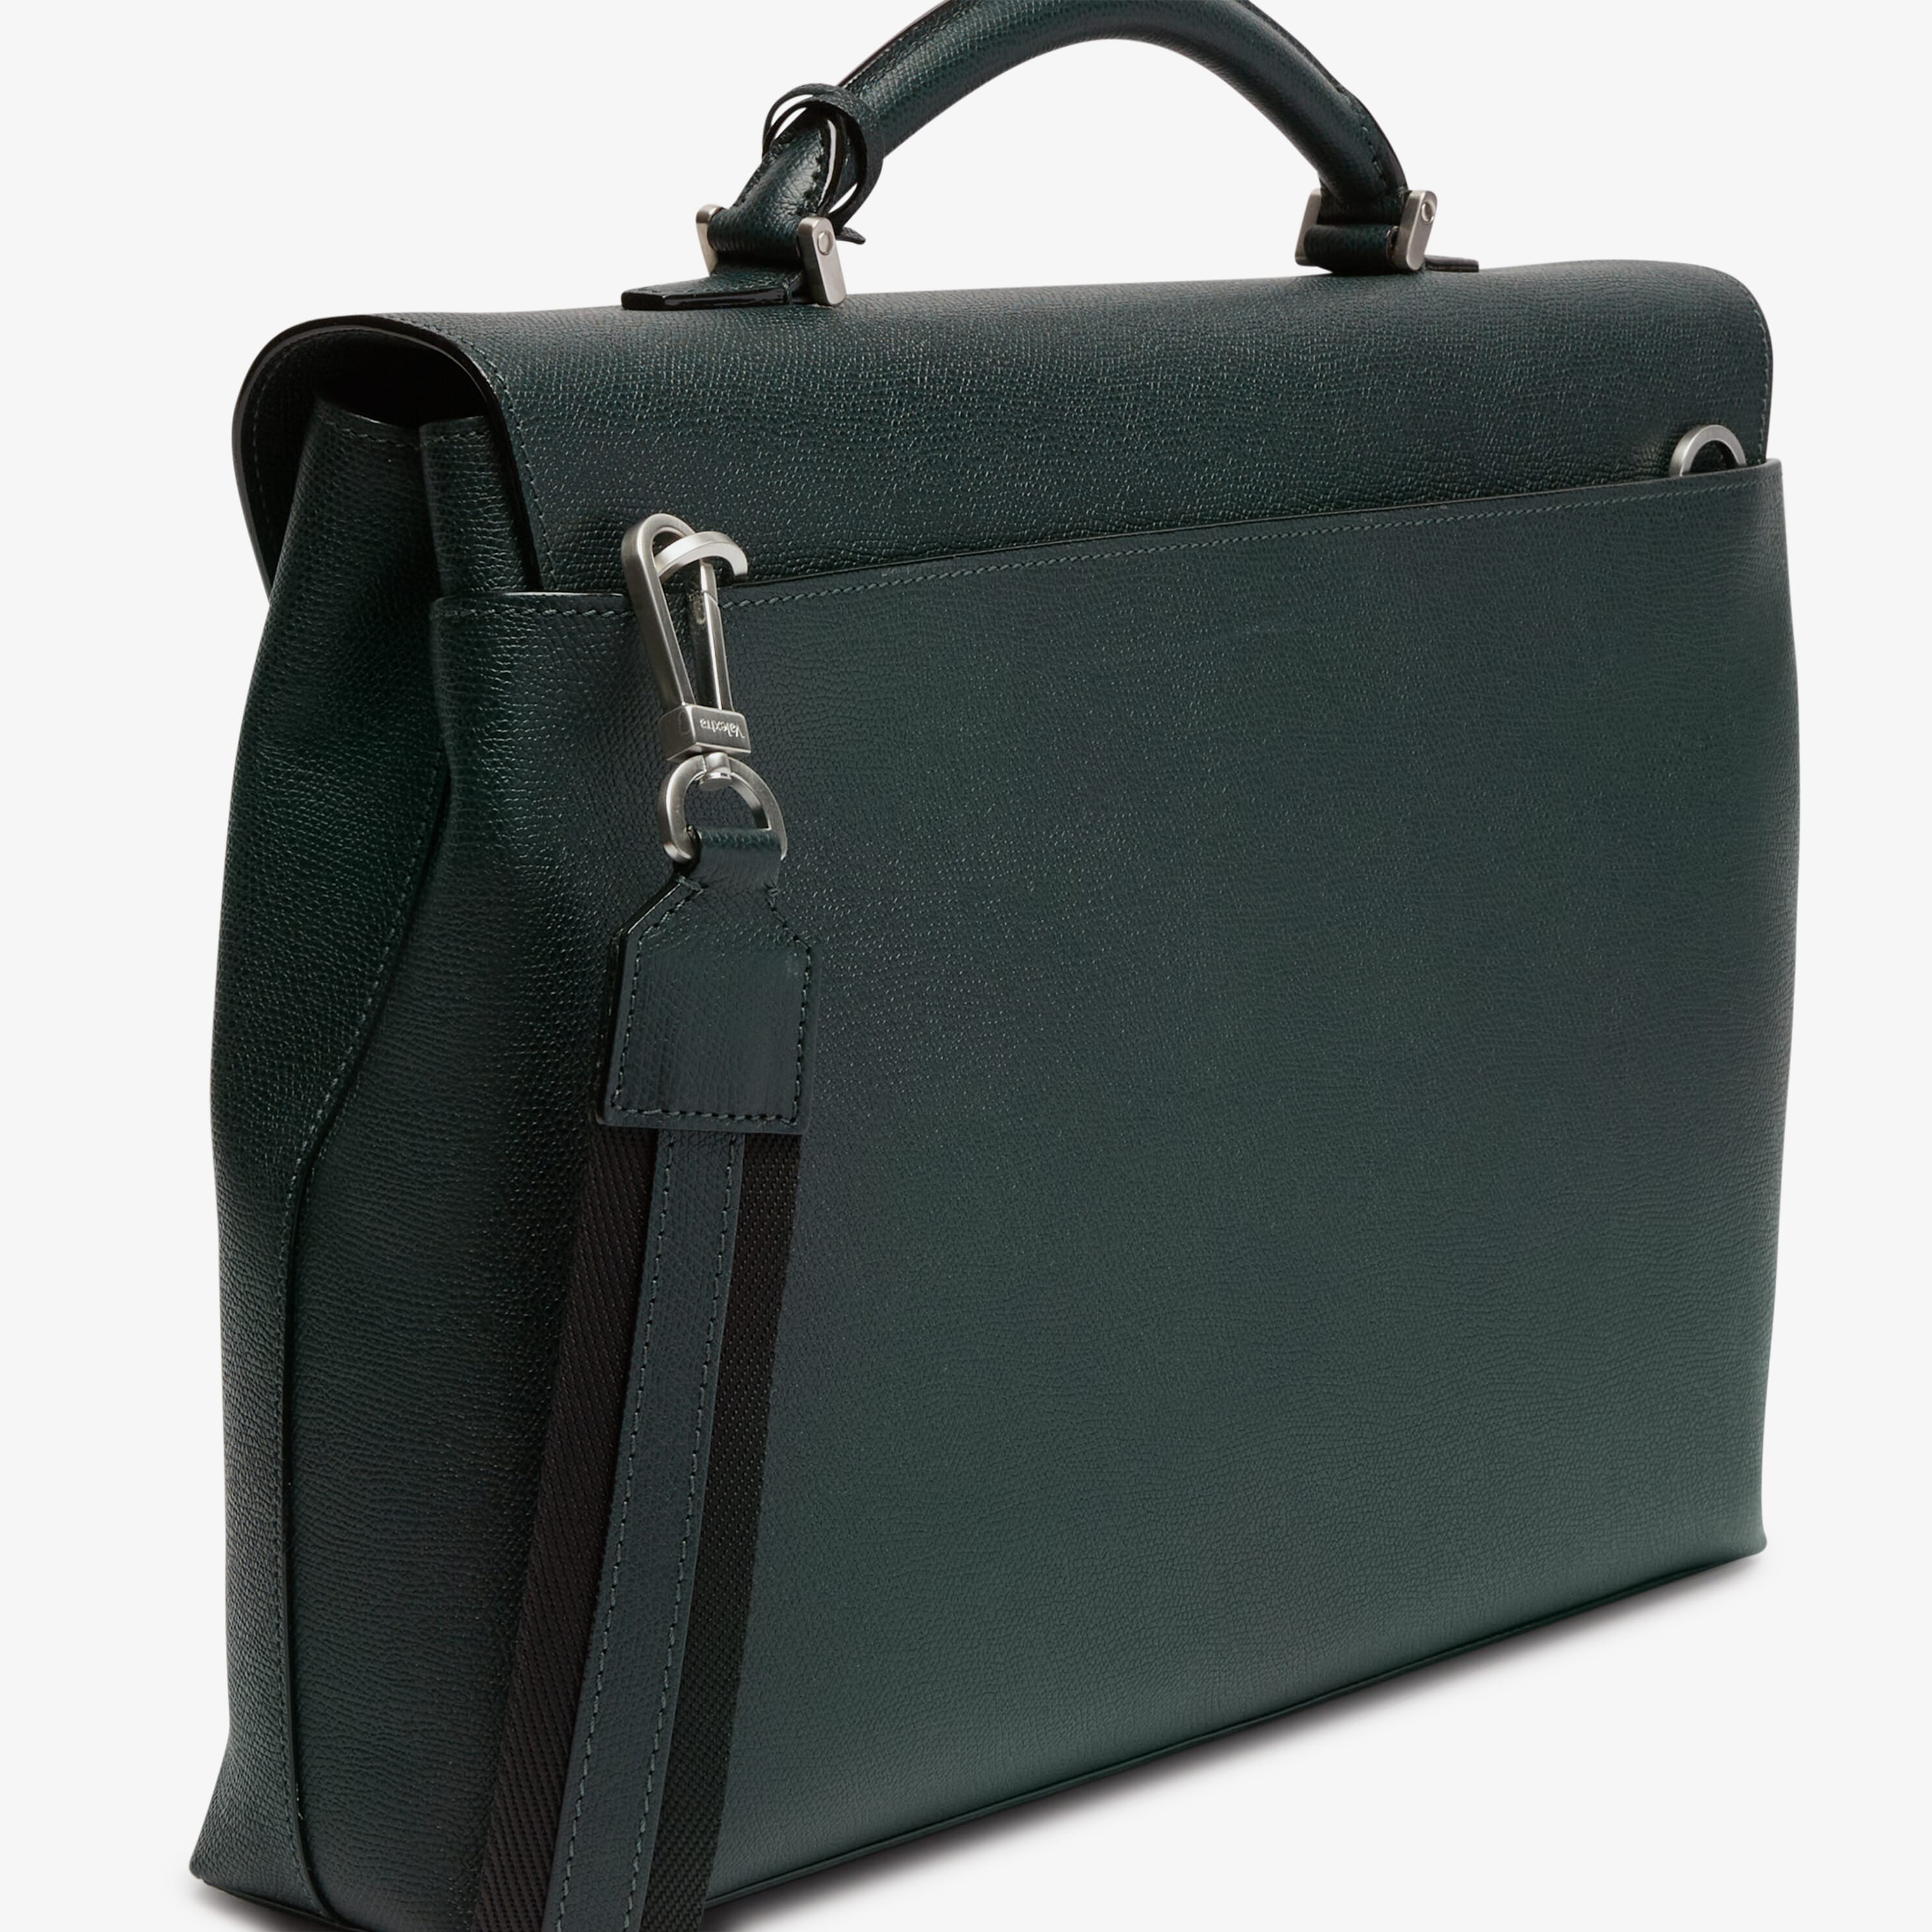 Avietta Briefcase with Flap 24h - Valextra Green - Vitello VS - Valextra - 4